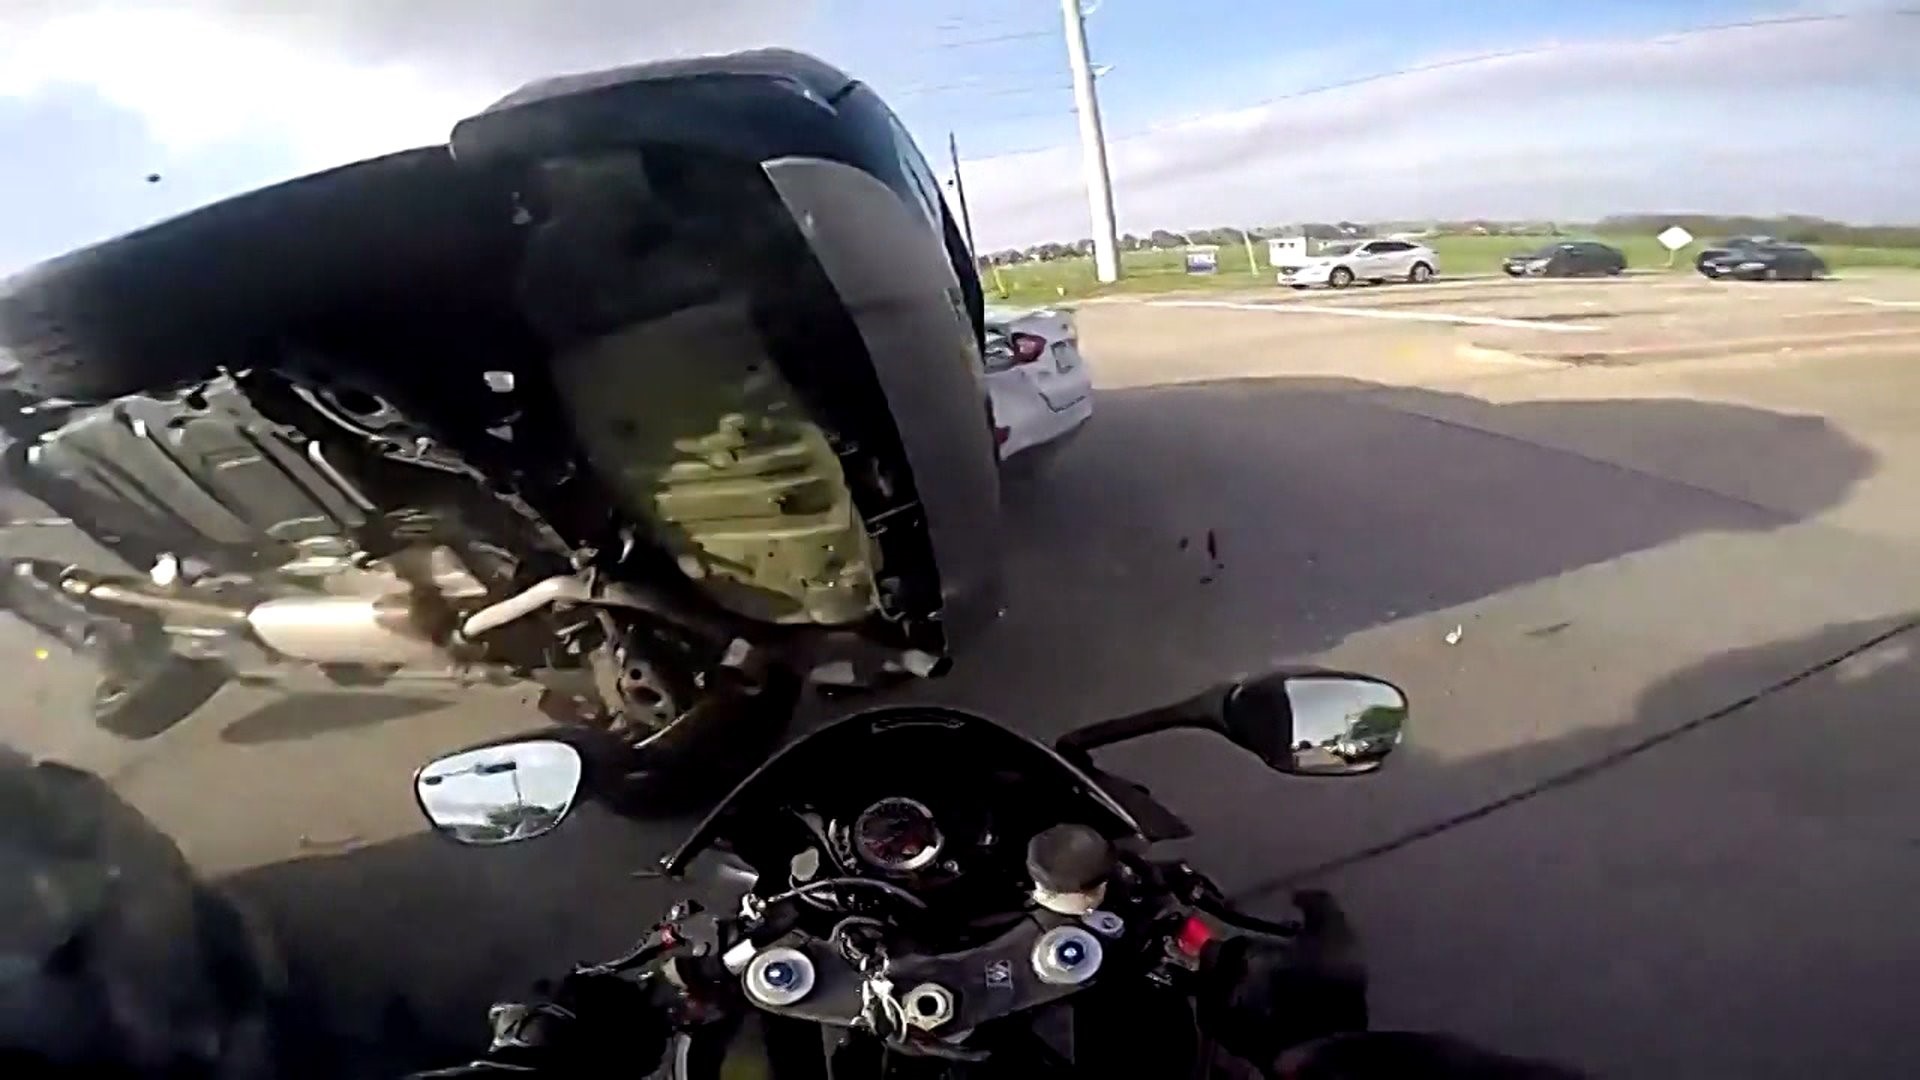 Texas Motorcycle Crash Caught on Camera